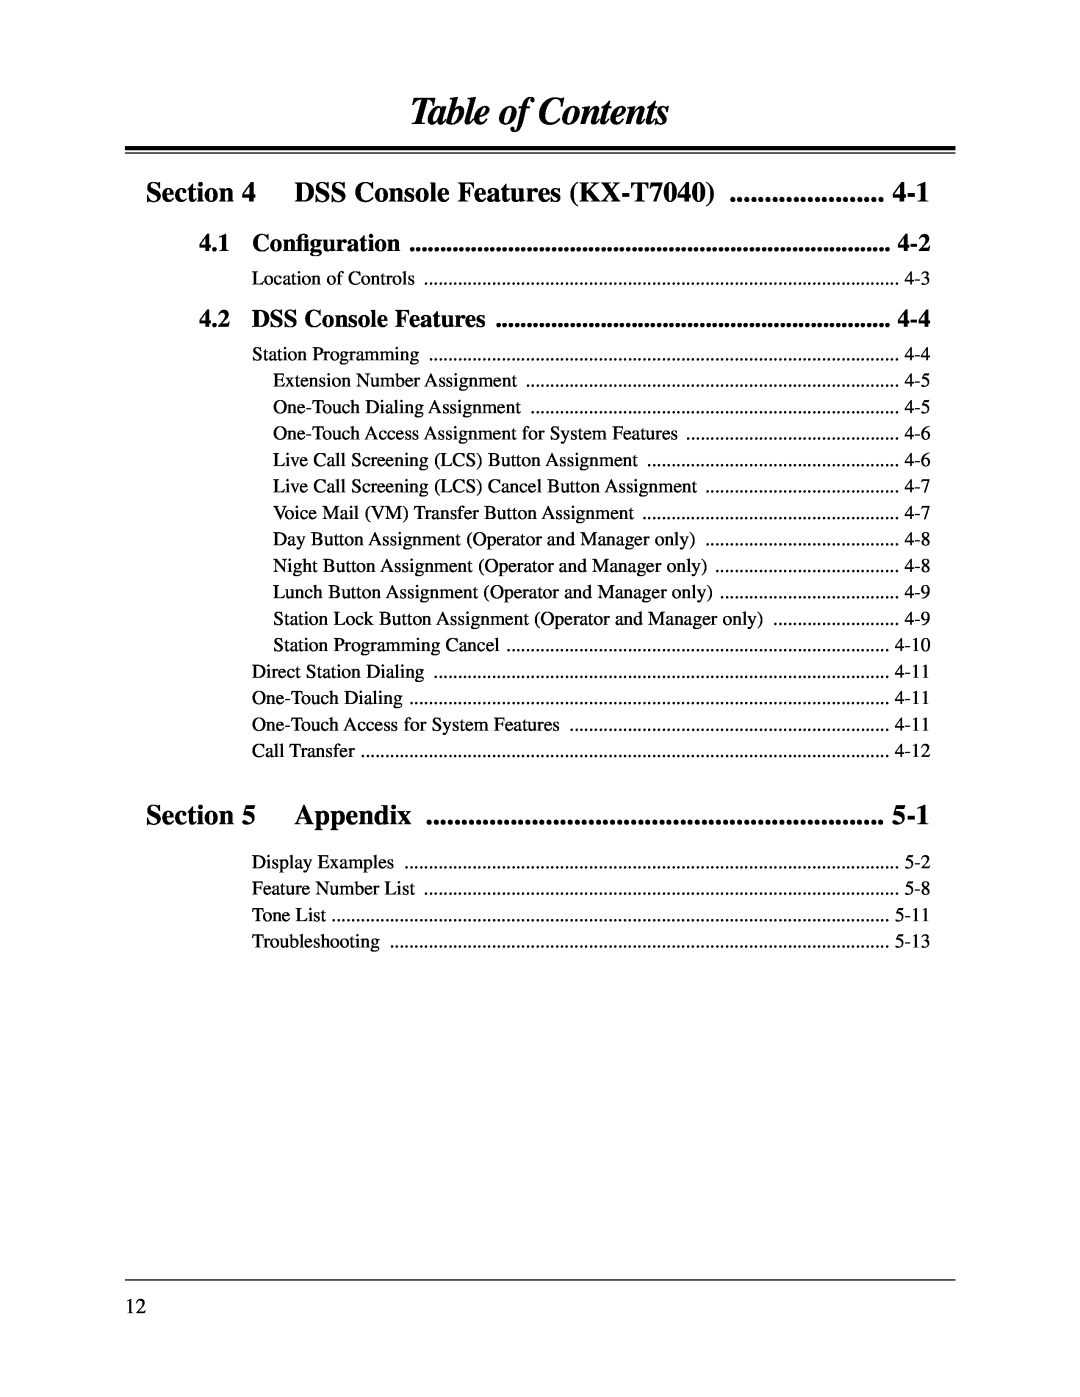 Panasonic KX-TA624 user manual DSS Console Features KX-T7040, Appendix, Conﬁguration, Table of Contents, Section 